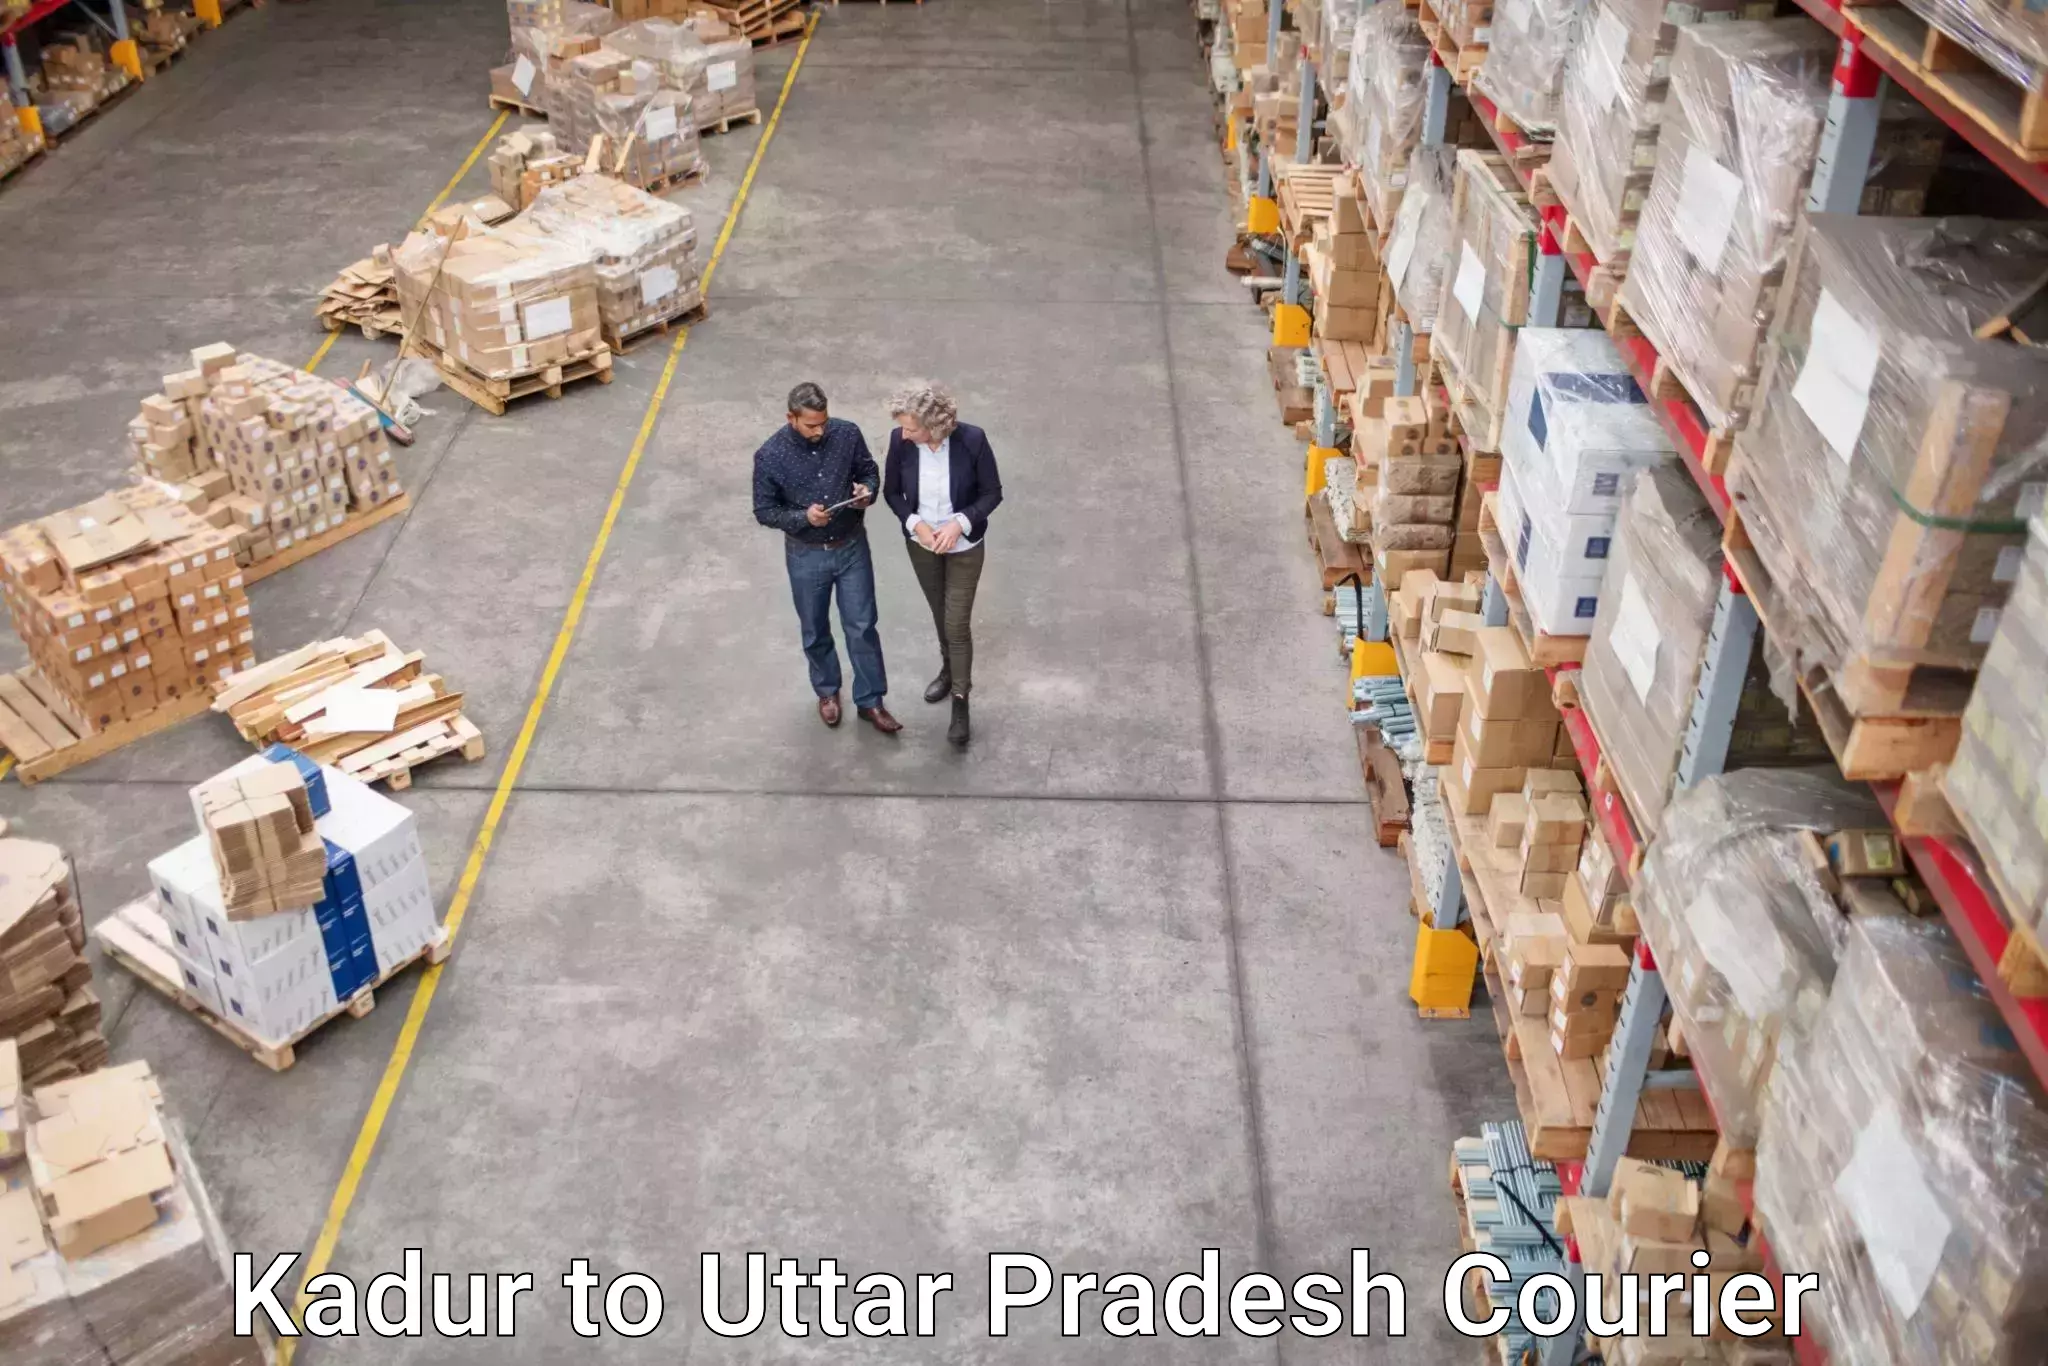 Full-service courier options Kadur to Aligarh Muslim University